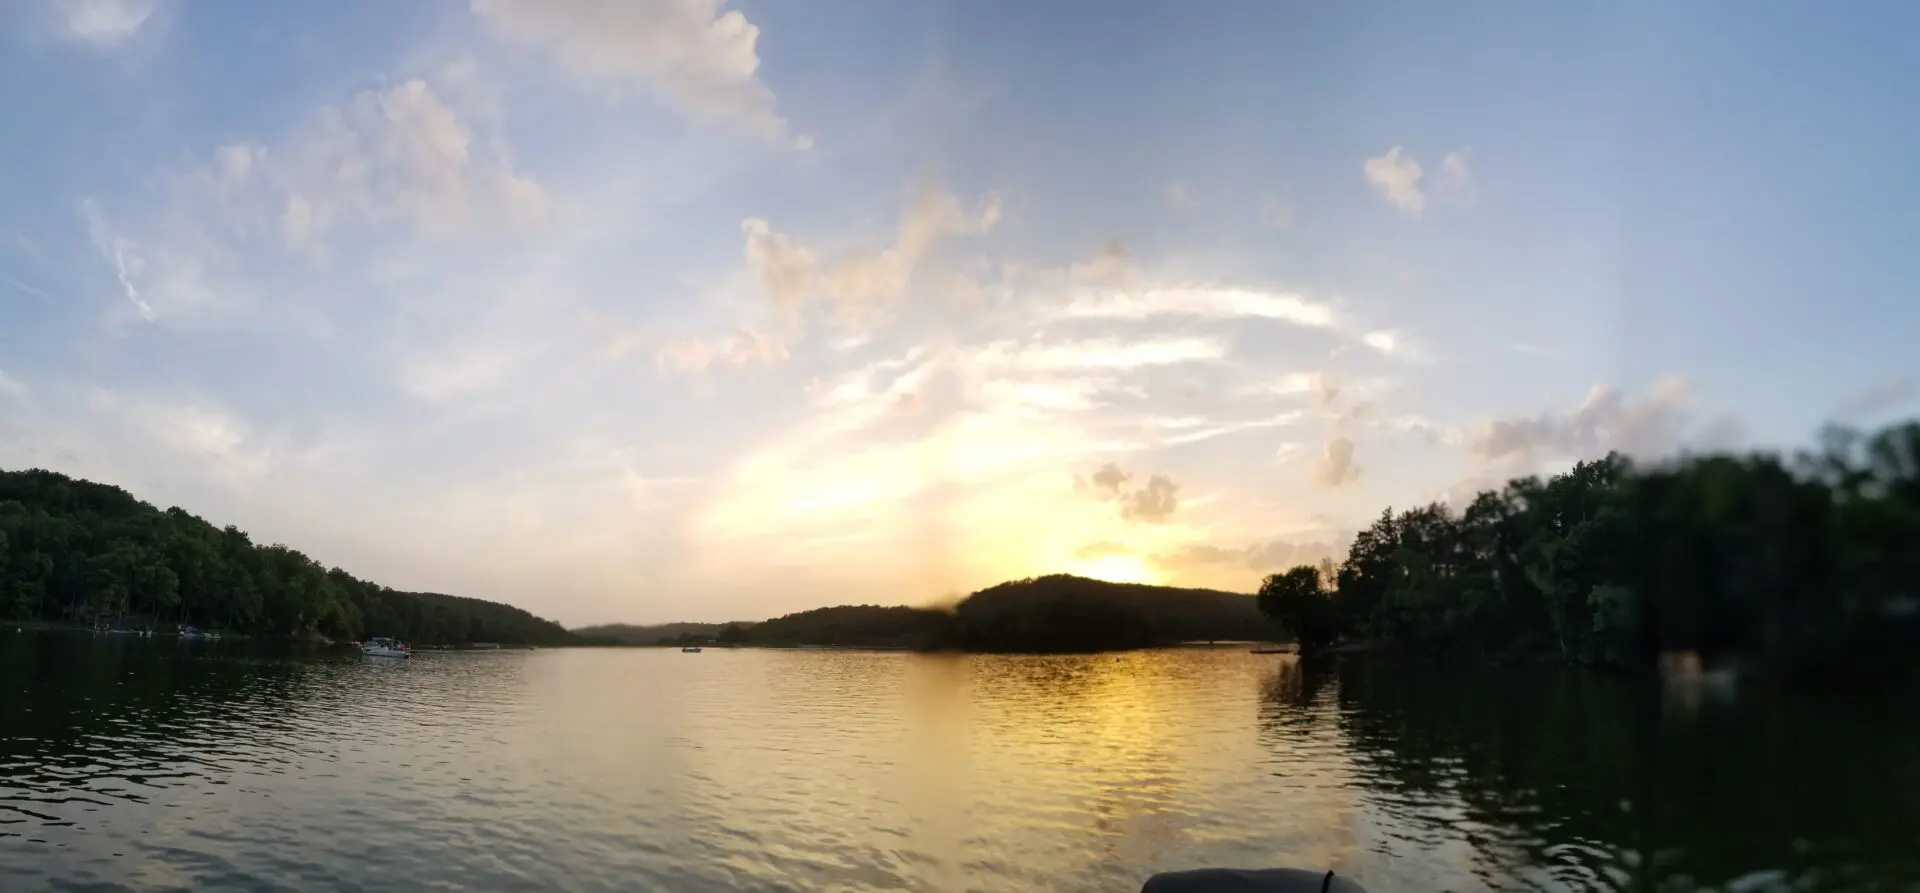 Lake Sherwood during sunrise